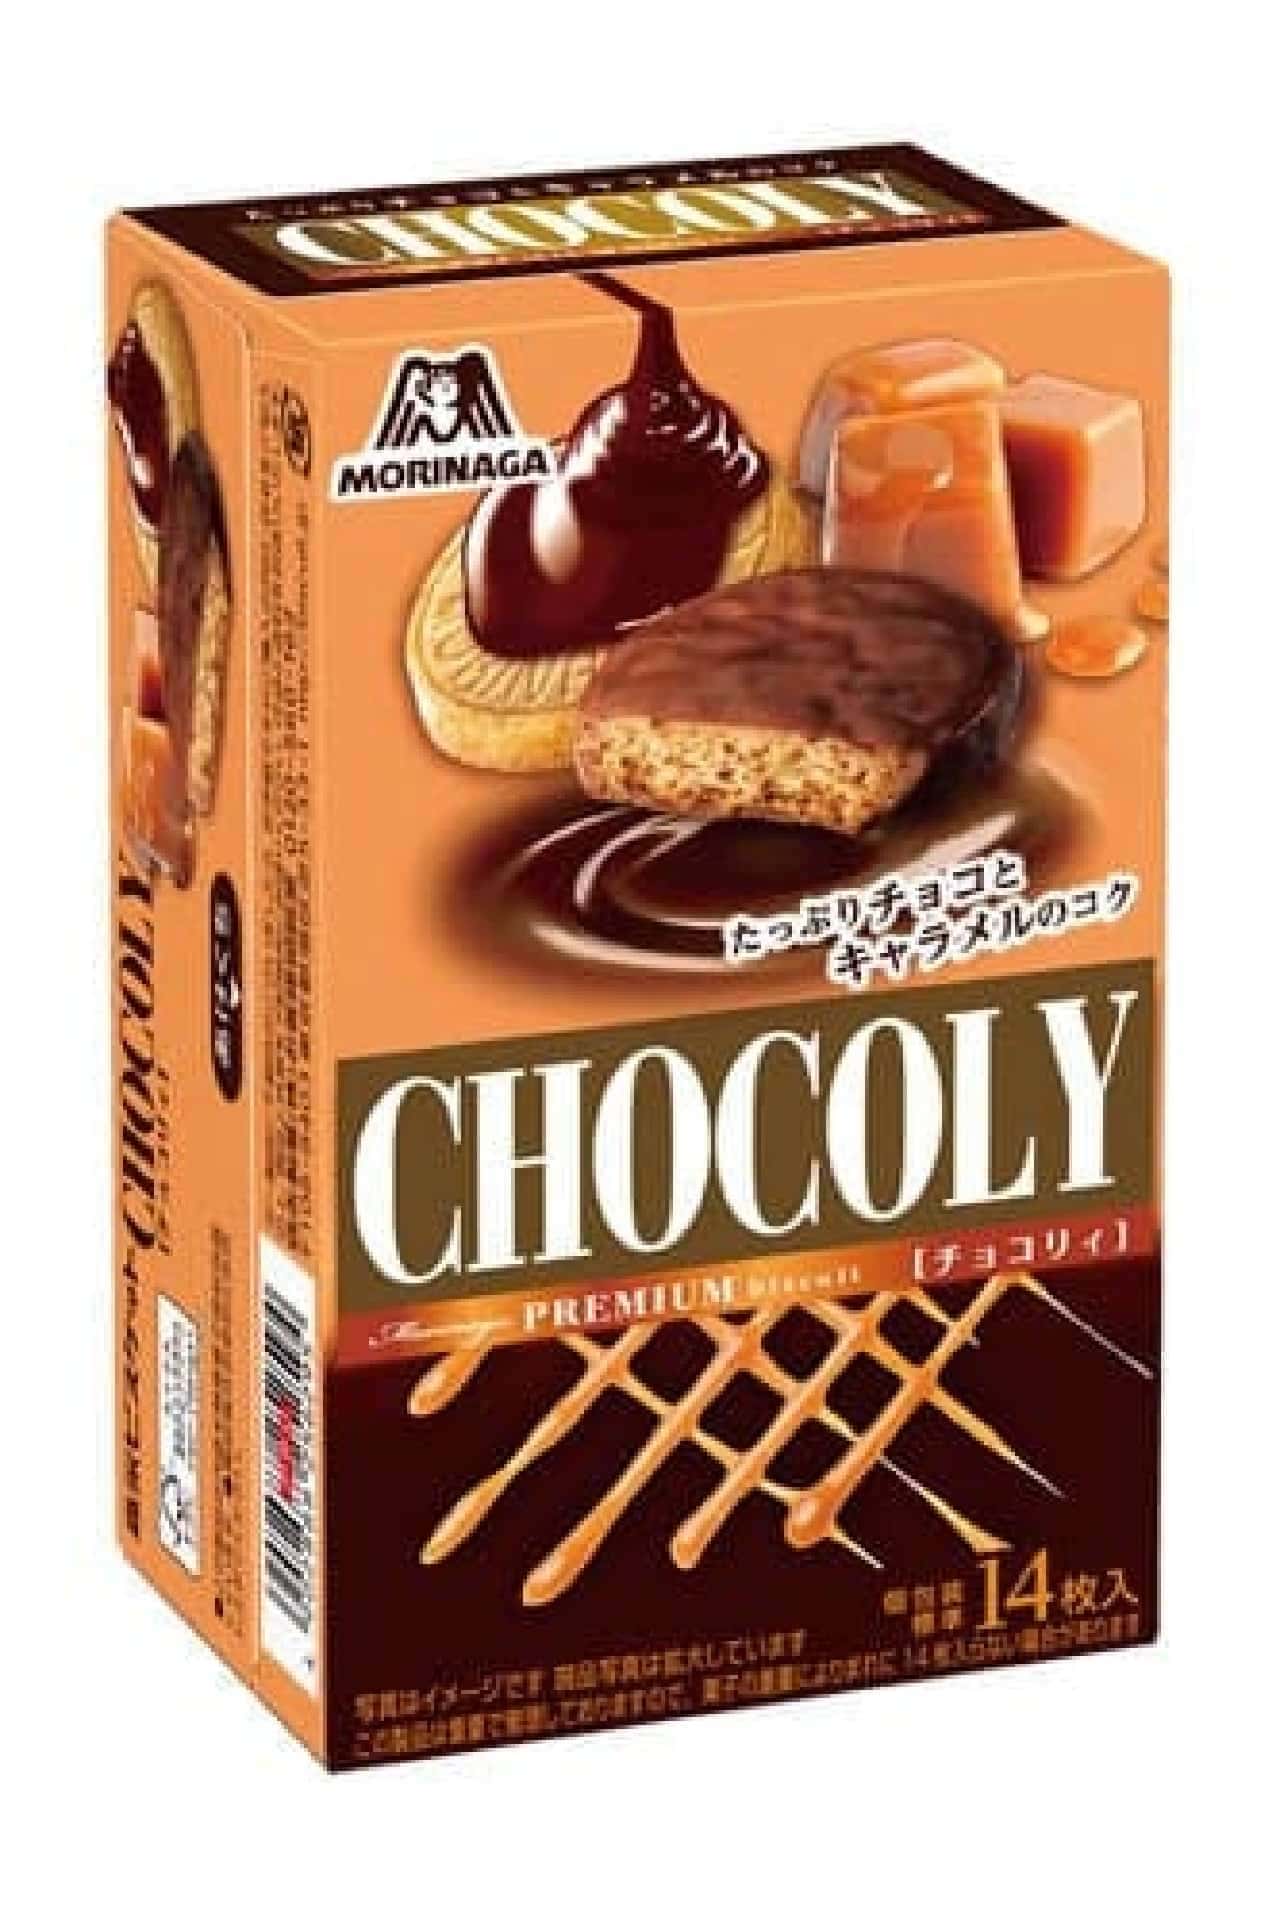 Morinaga Biscuit Chocolate